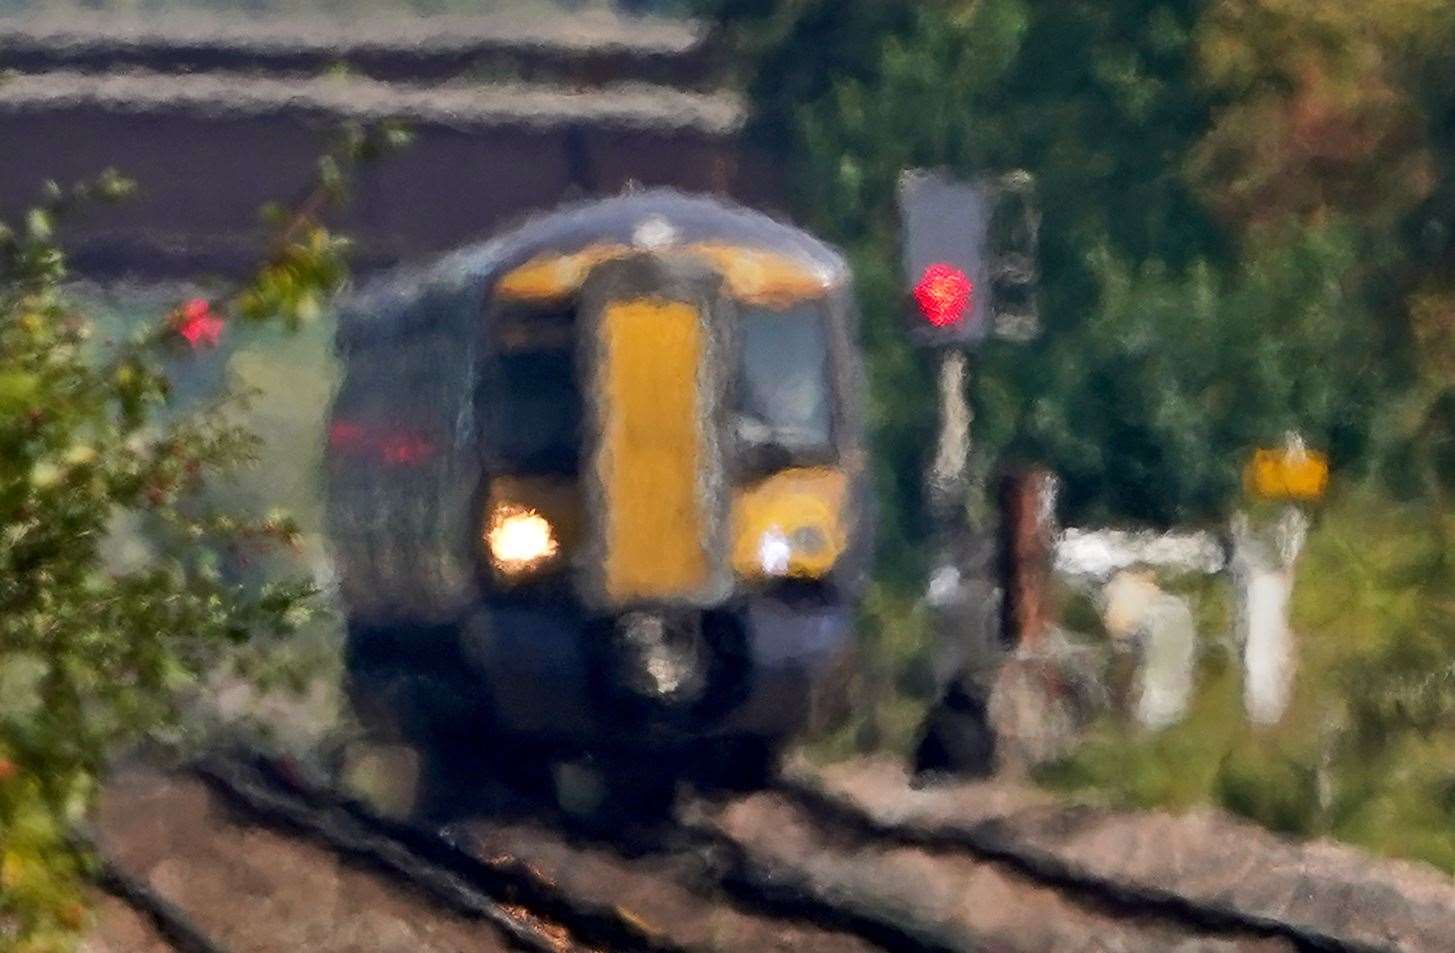 A train passes through heat haze on a railway line in Ashford, Kent (Gareth Fuller/PA)